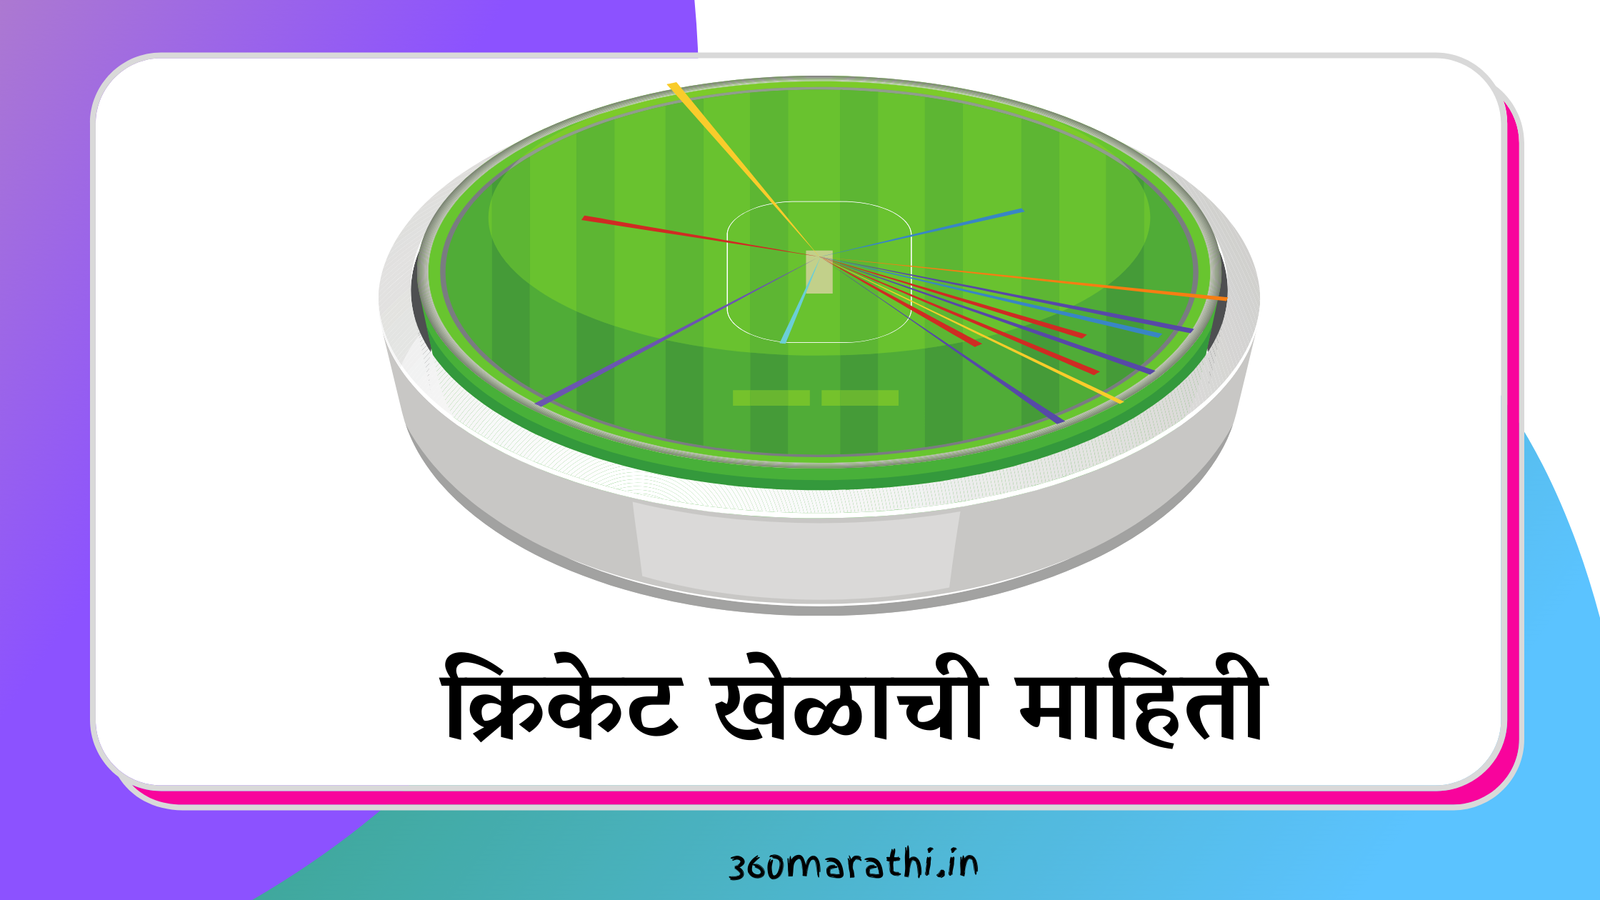 क्रिकेट खेळाची माहिती - Cricket Information In Marathi